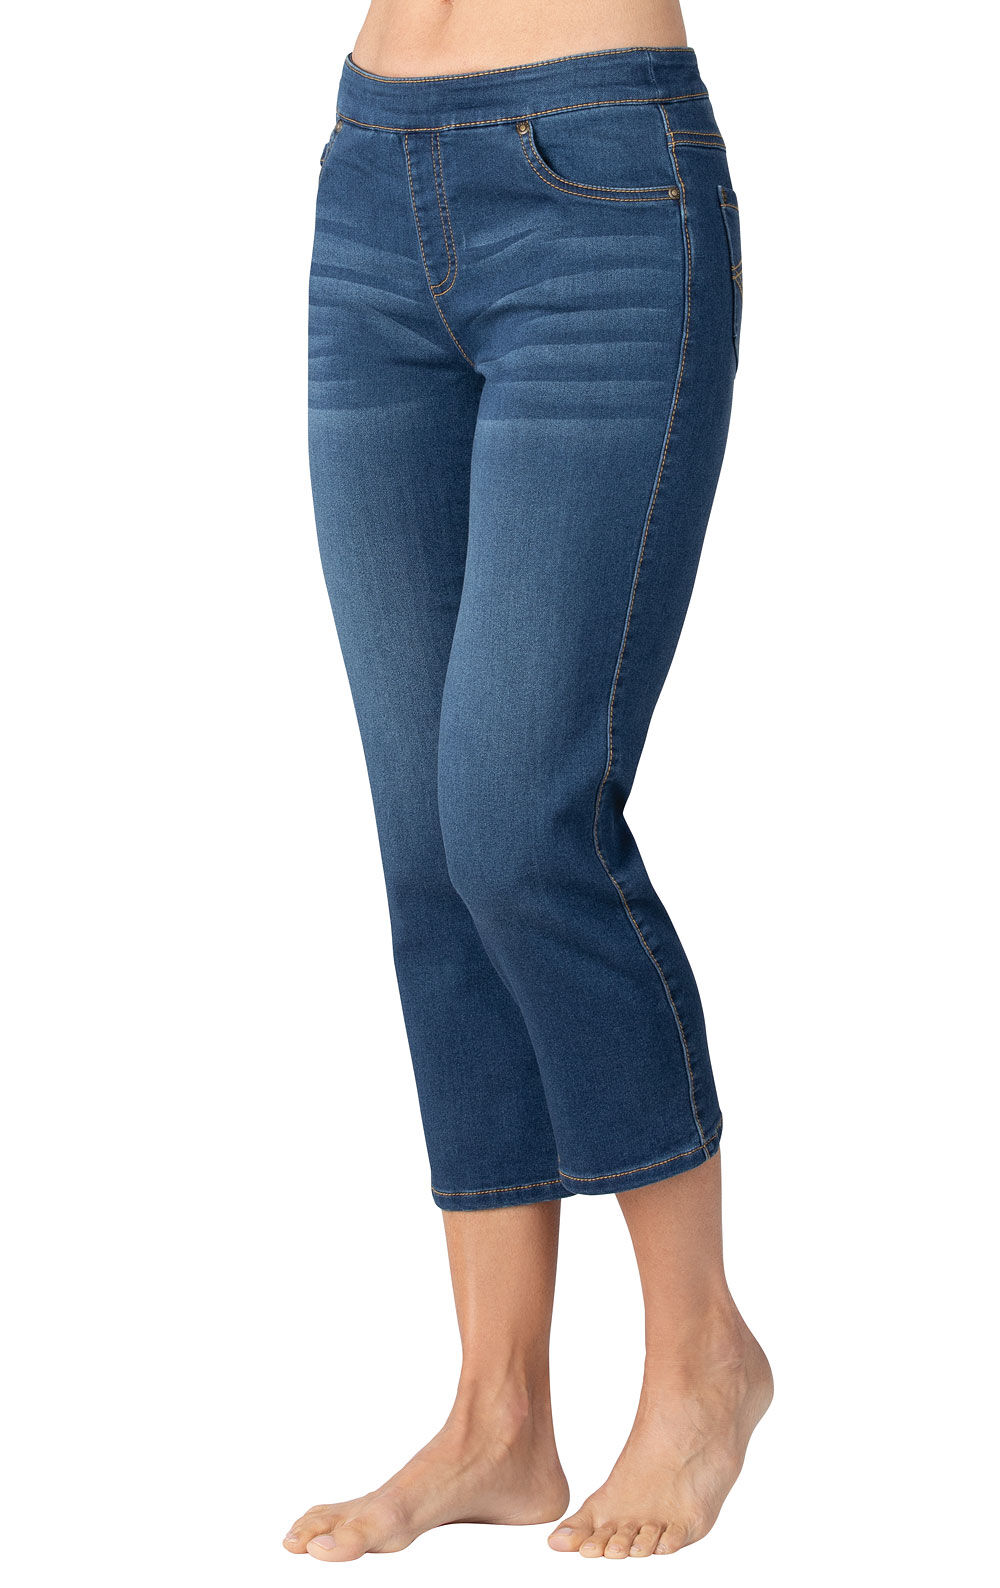 Buy Women's Capri Pants and Denim Jeans Online | Cotton Dayz